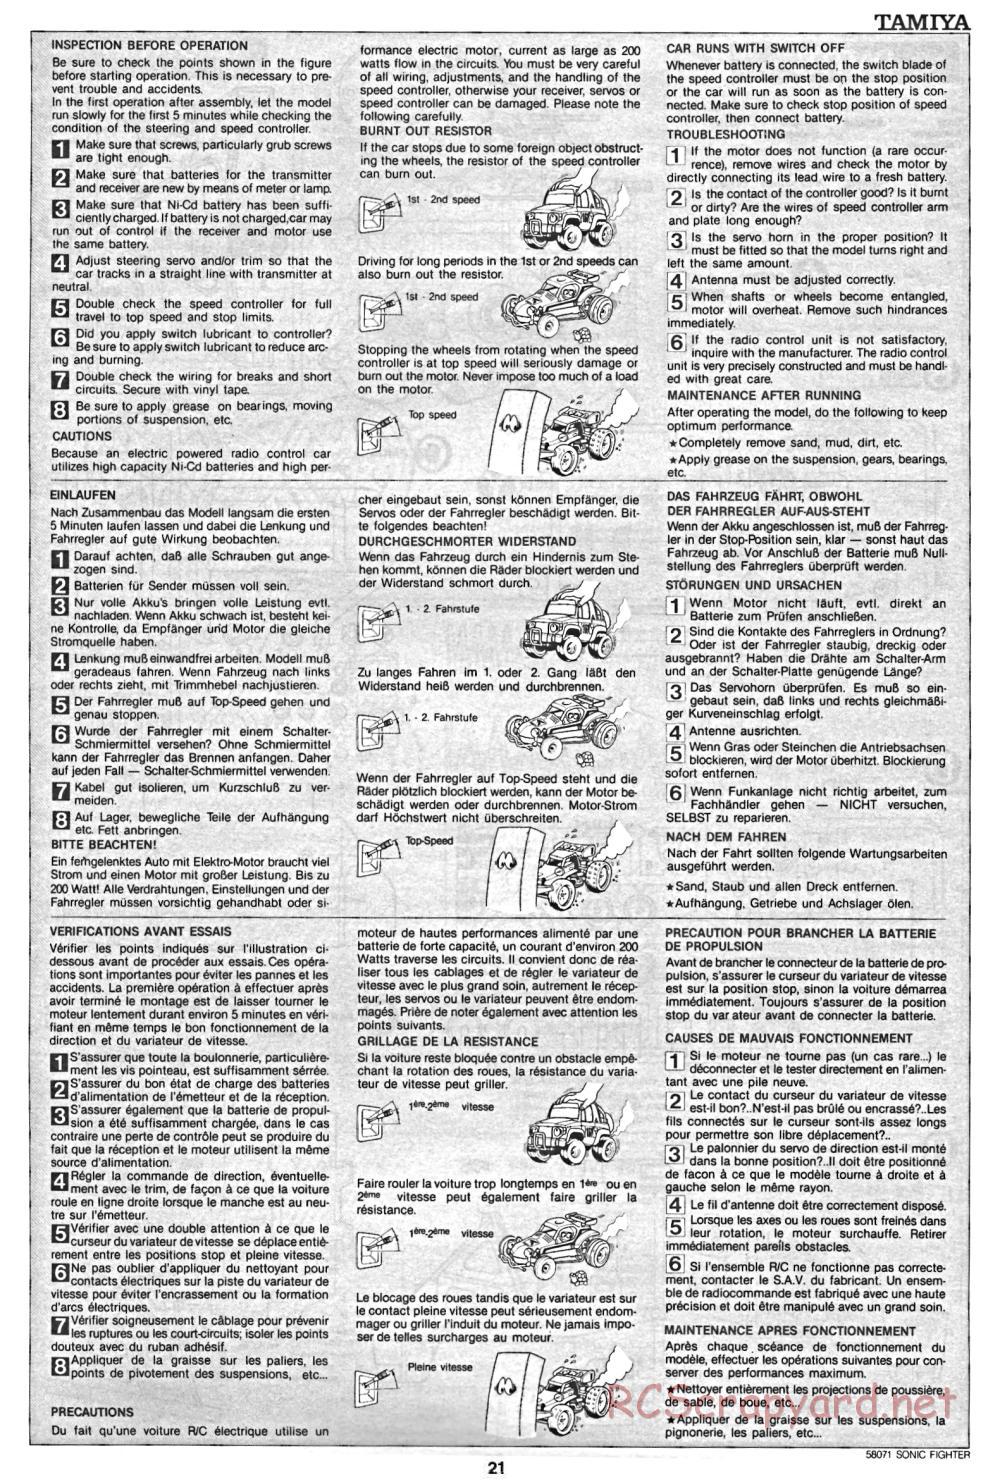 Tamiya - Sonic Fighter - 58071 - Manual - Page 21